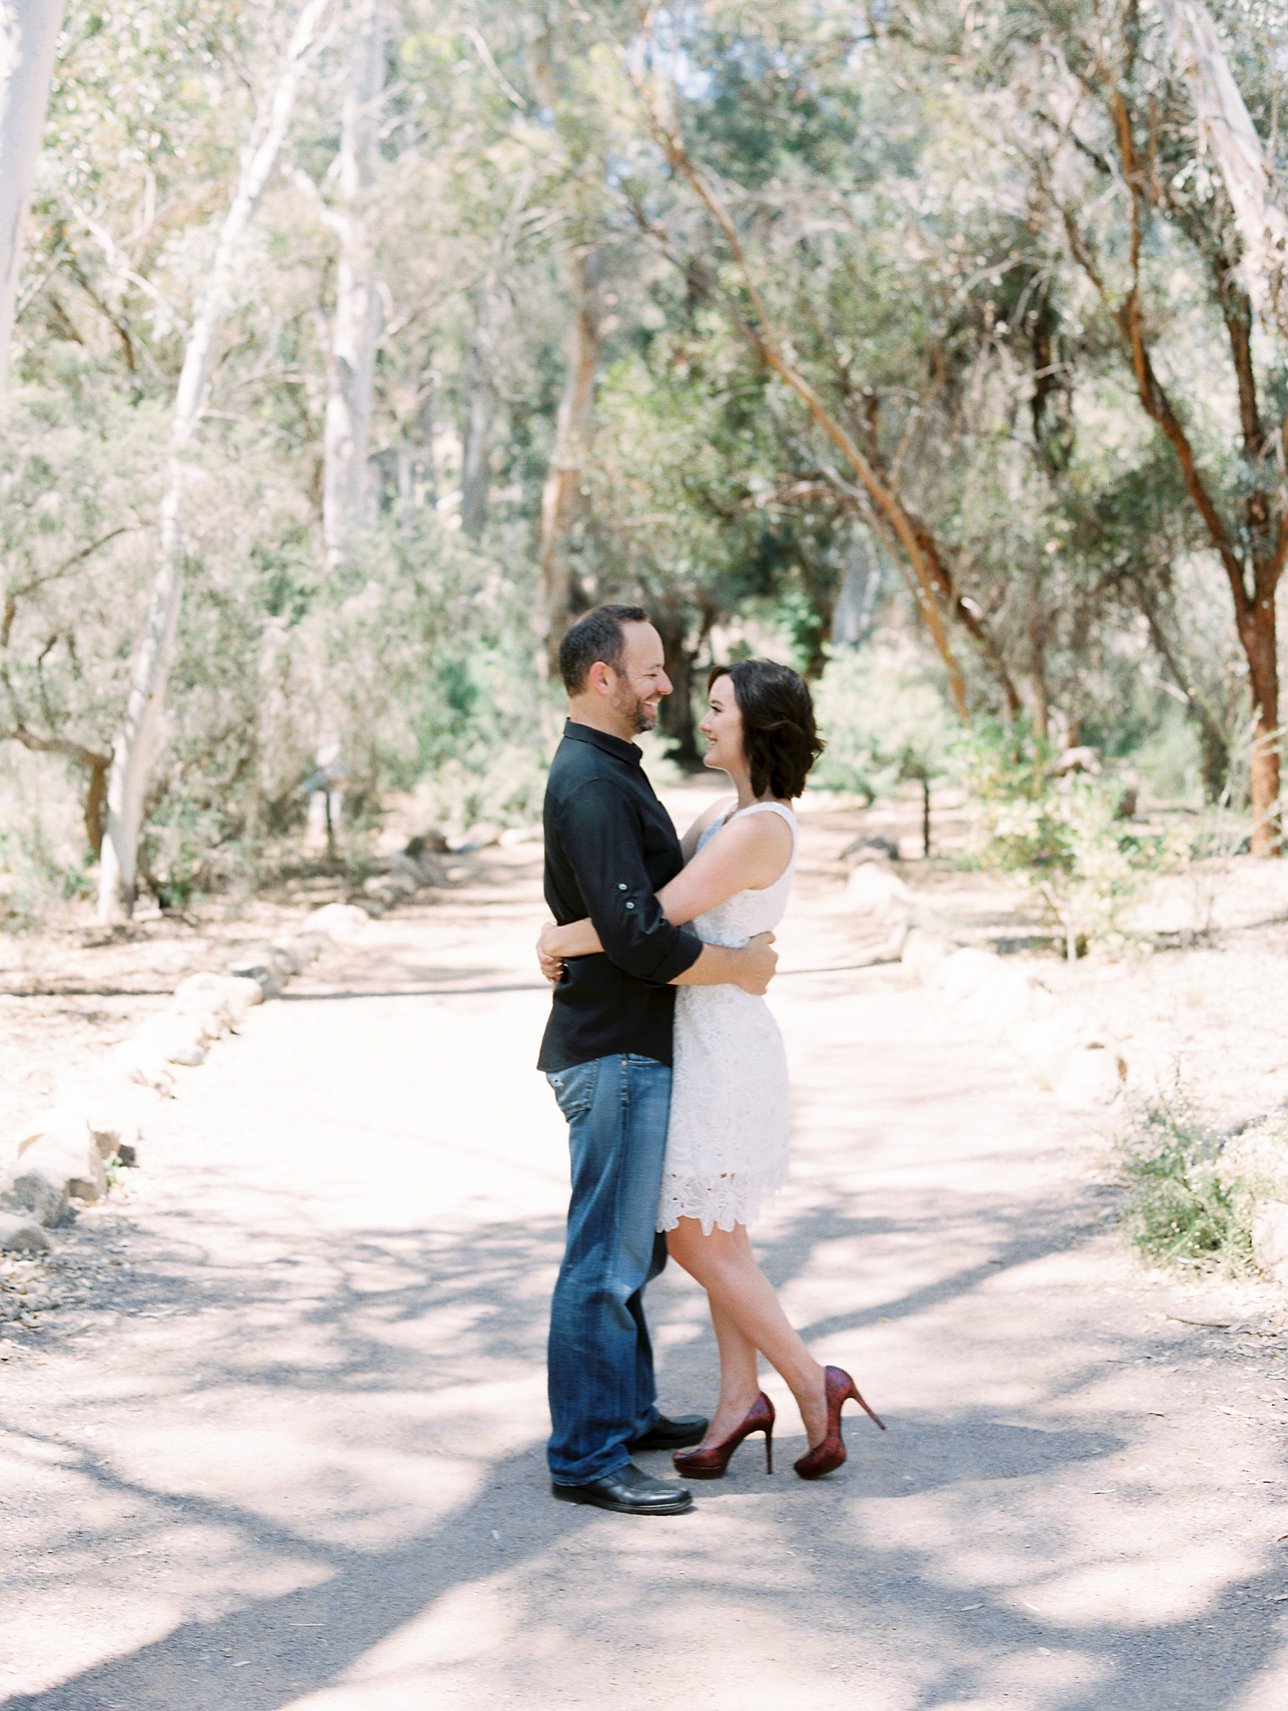 Boyce Thompson Arboretum engagement photos - Scottsdale Wedding Photographer | Rachel Solomon Photography_6643